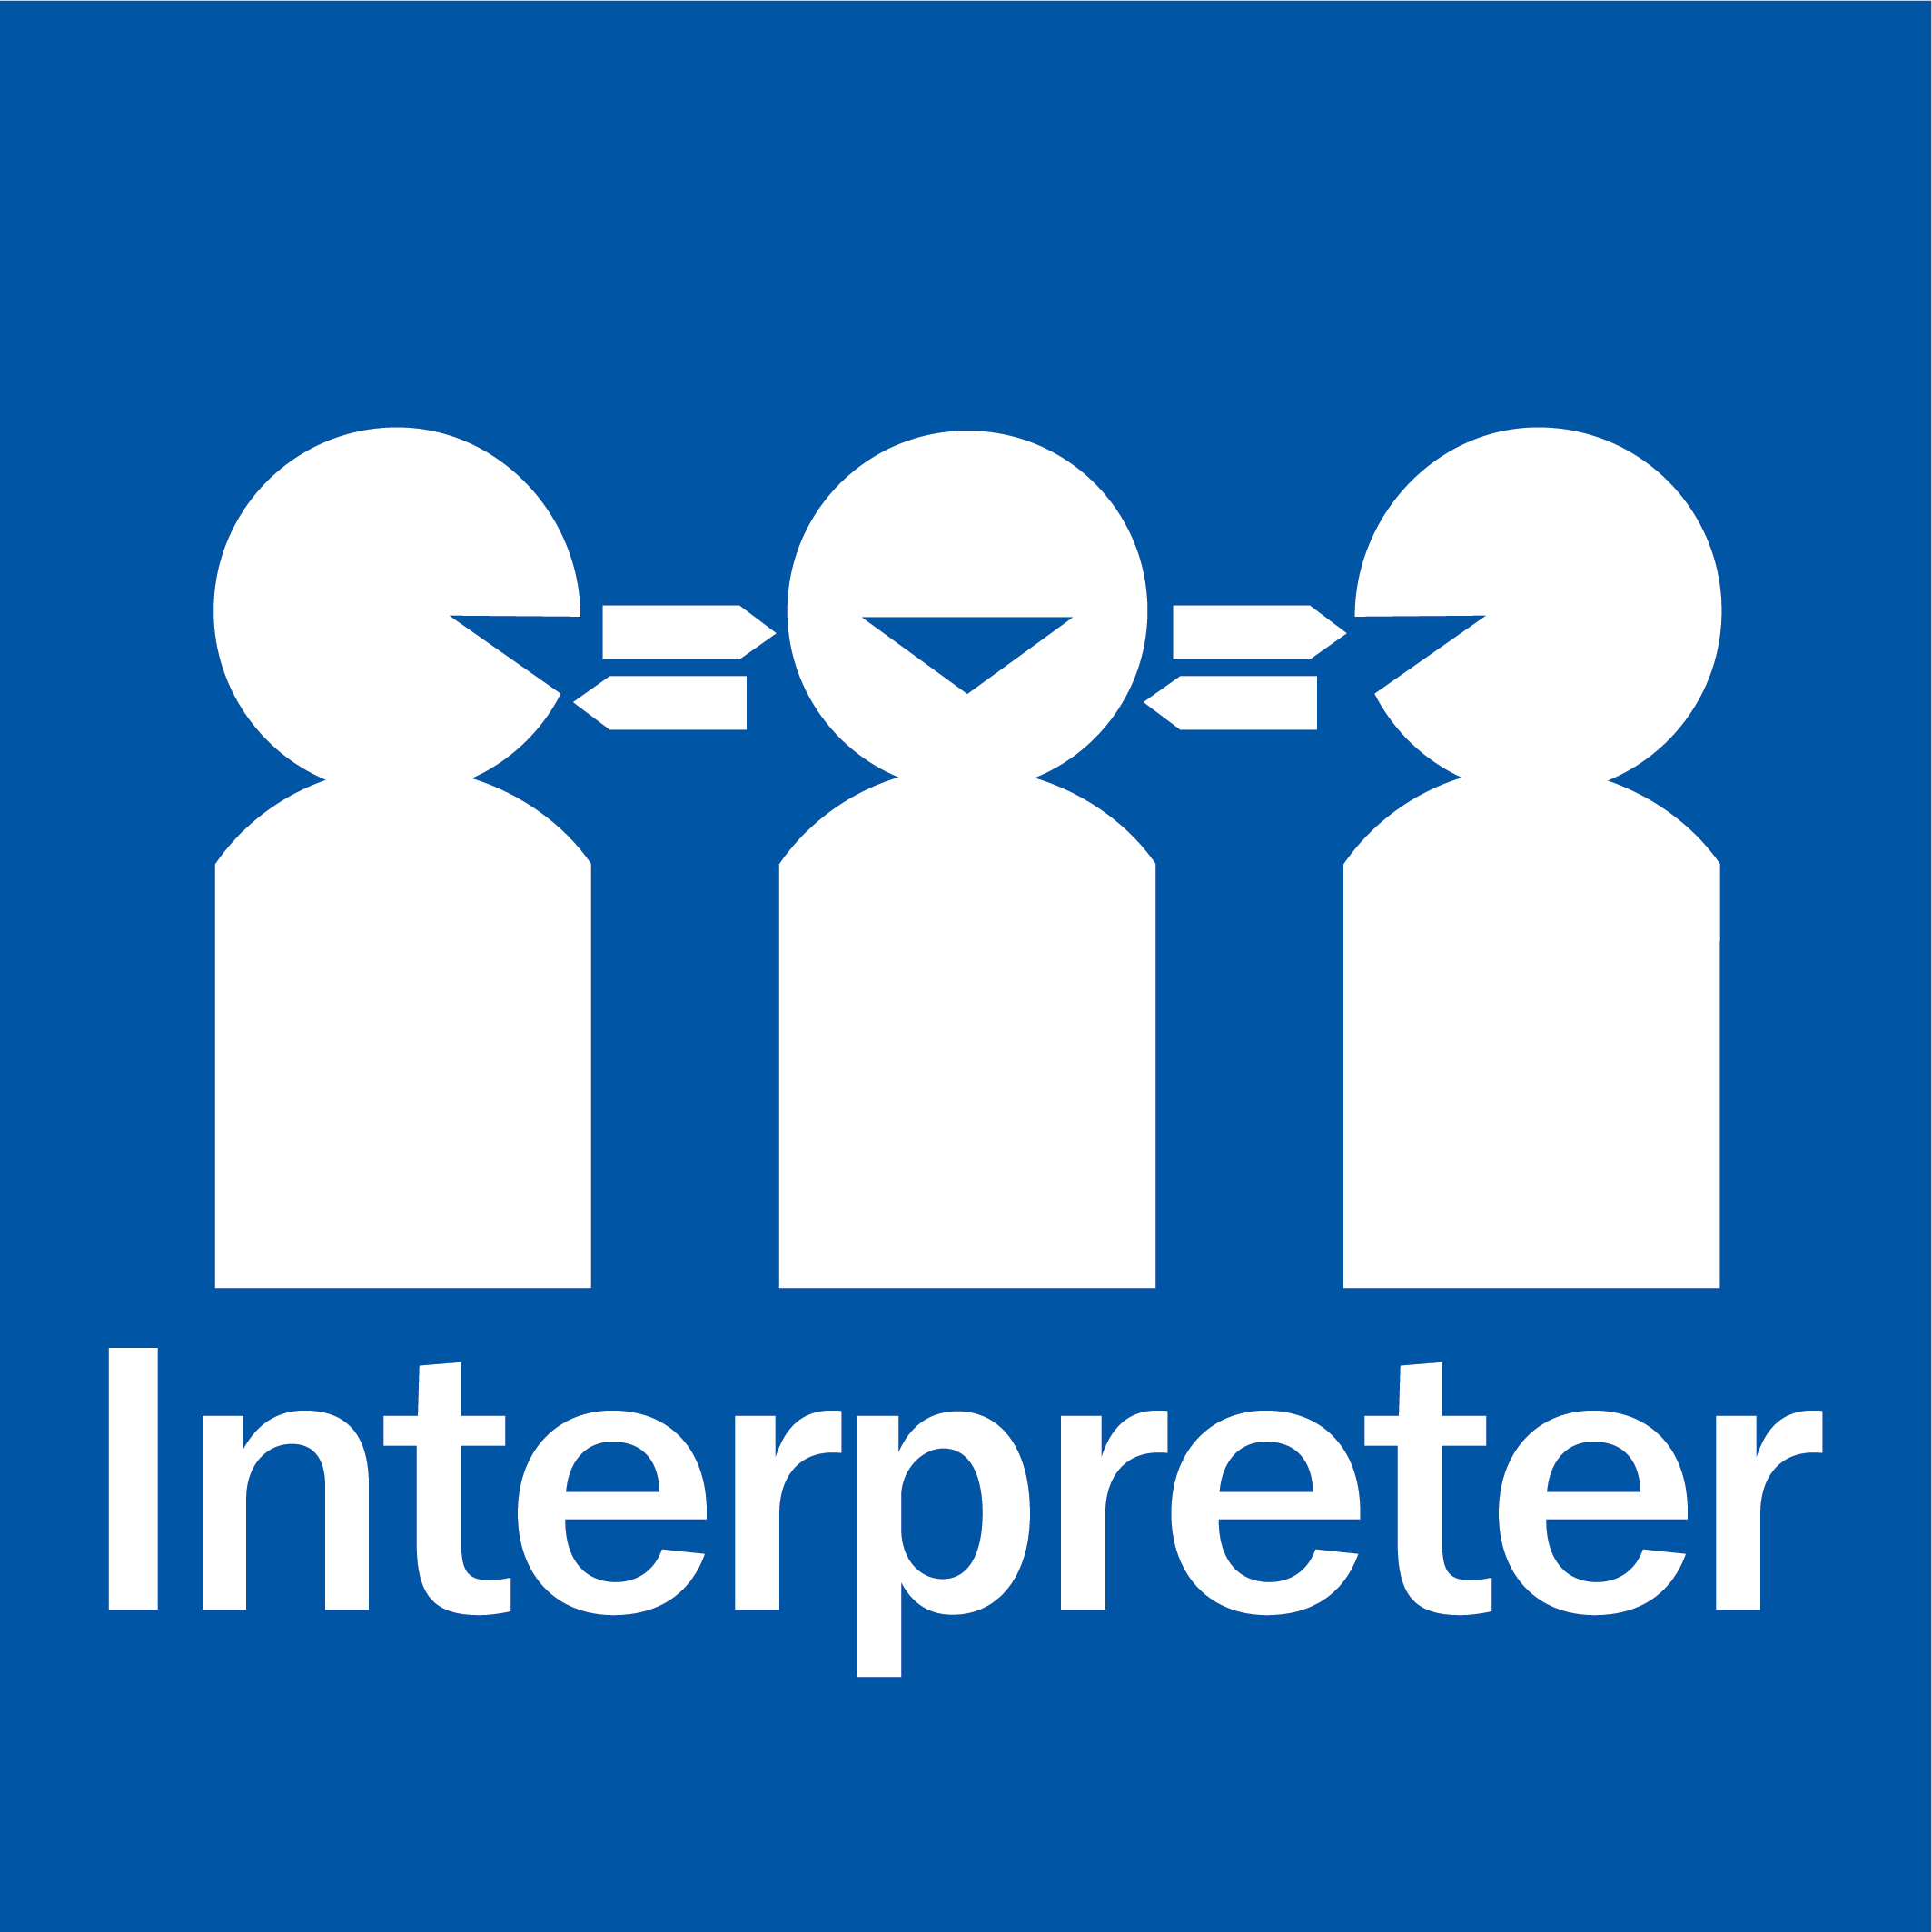 Contact Interpreter on 131 450